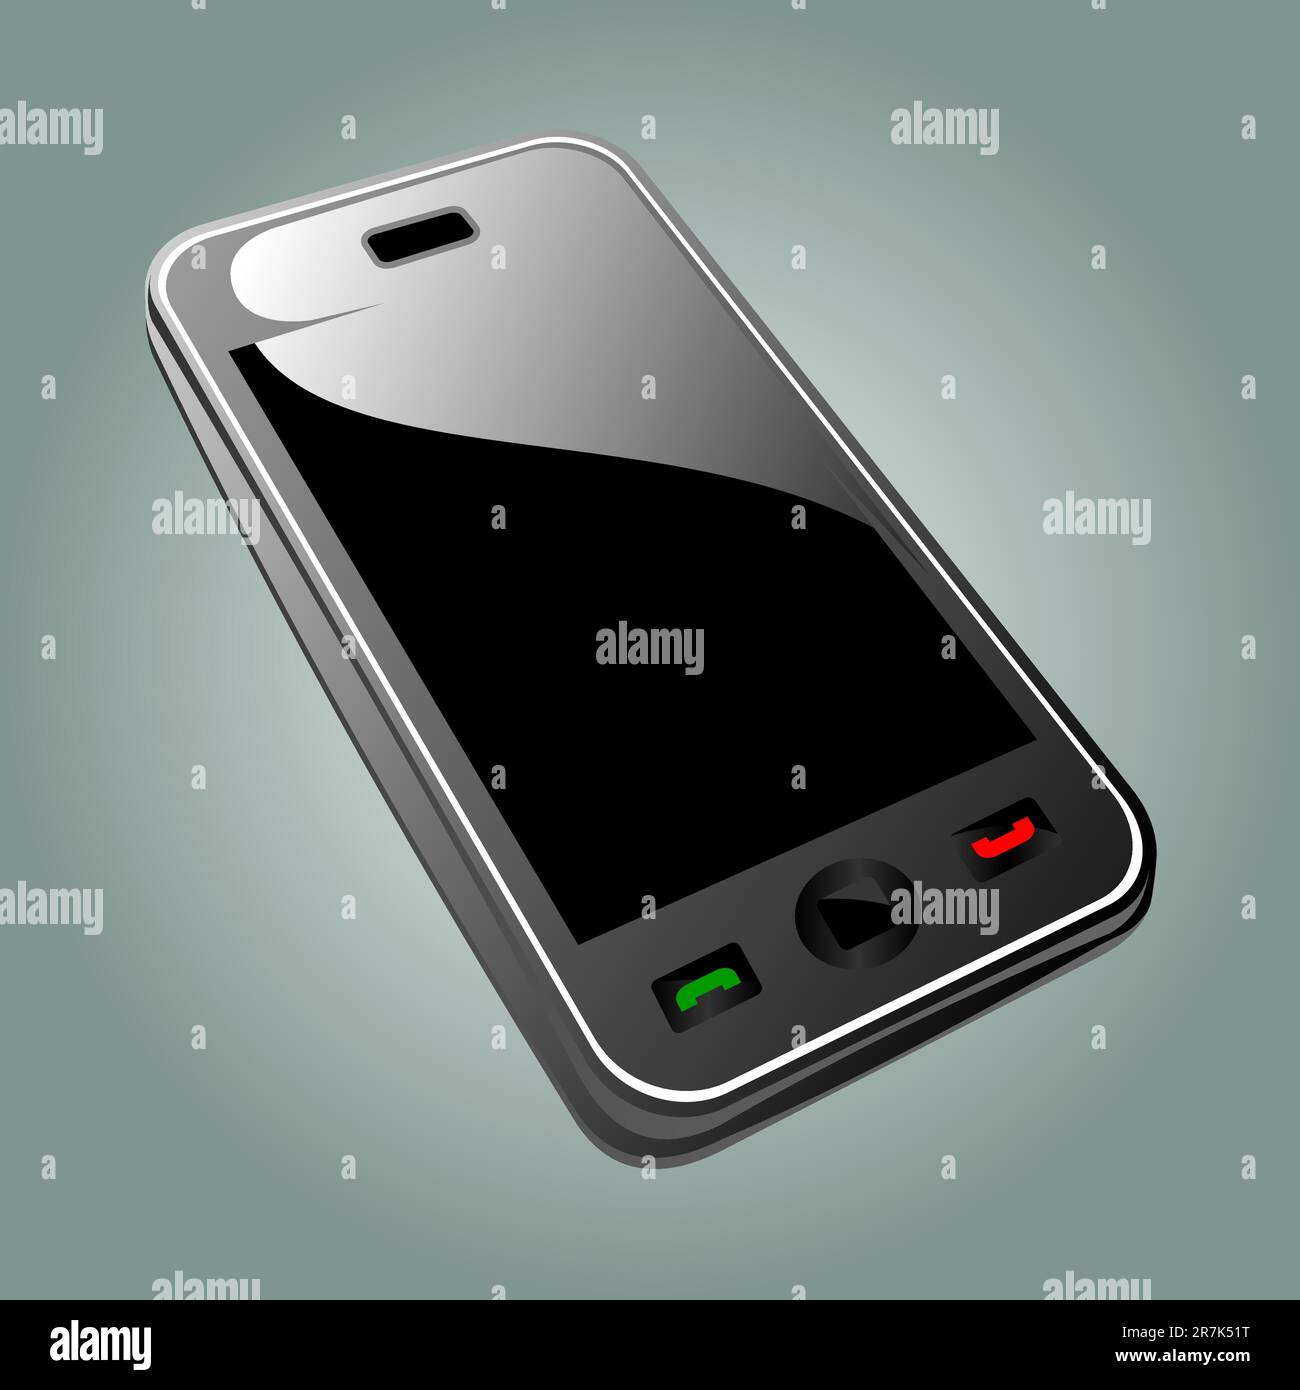 simplistic modern smartphone illustration Stock Vector